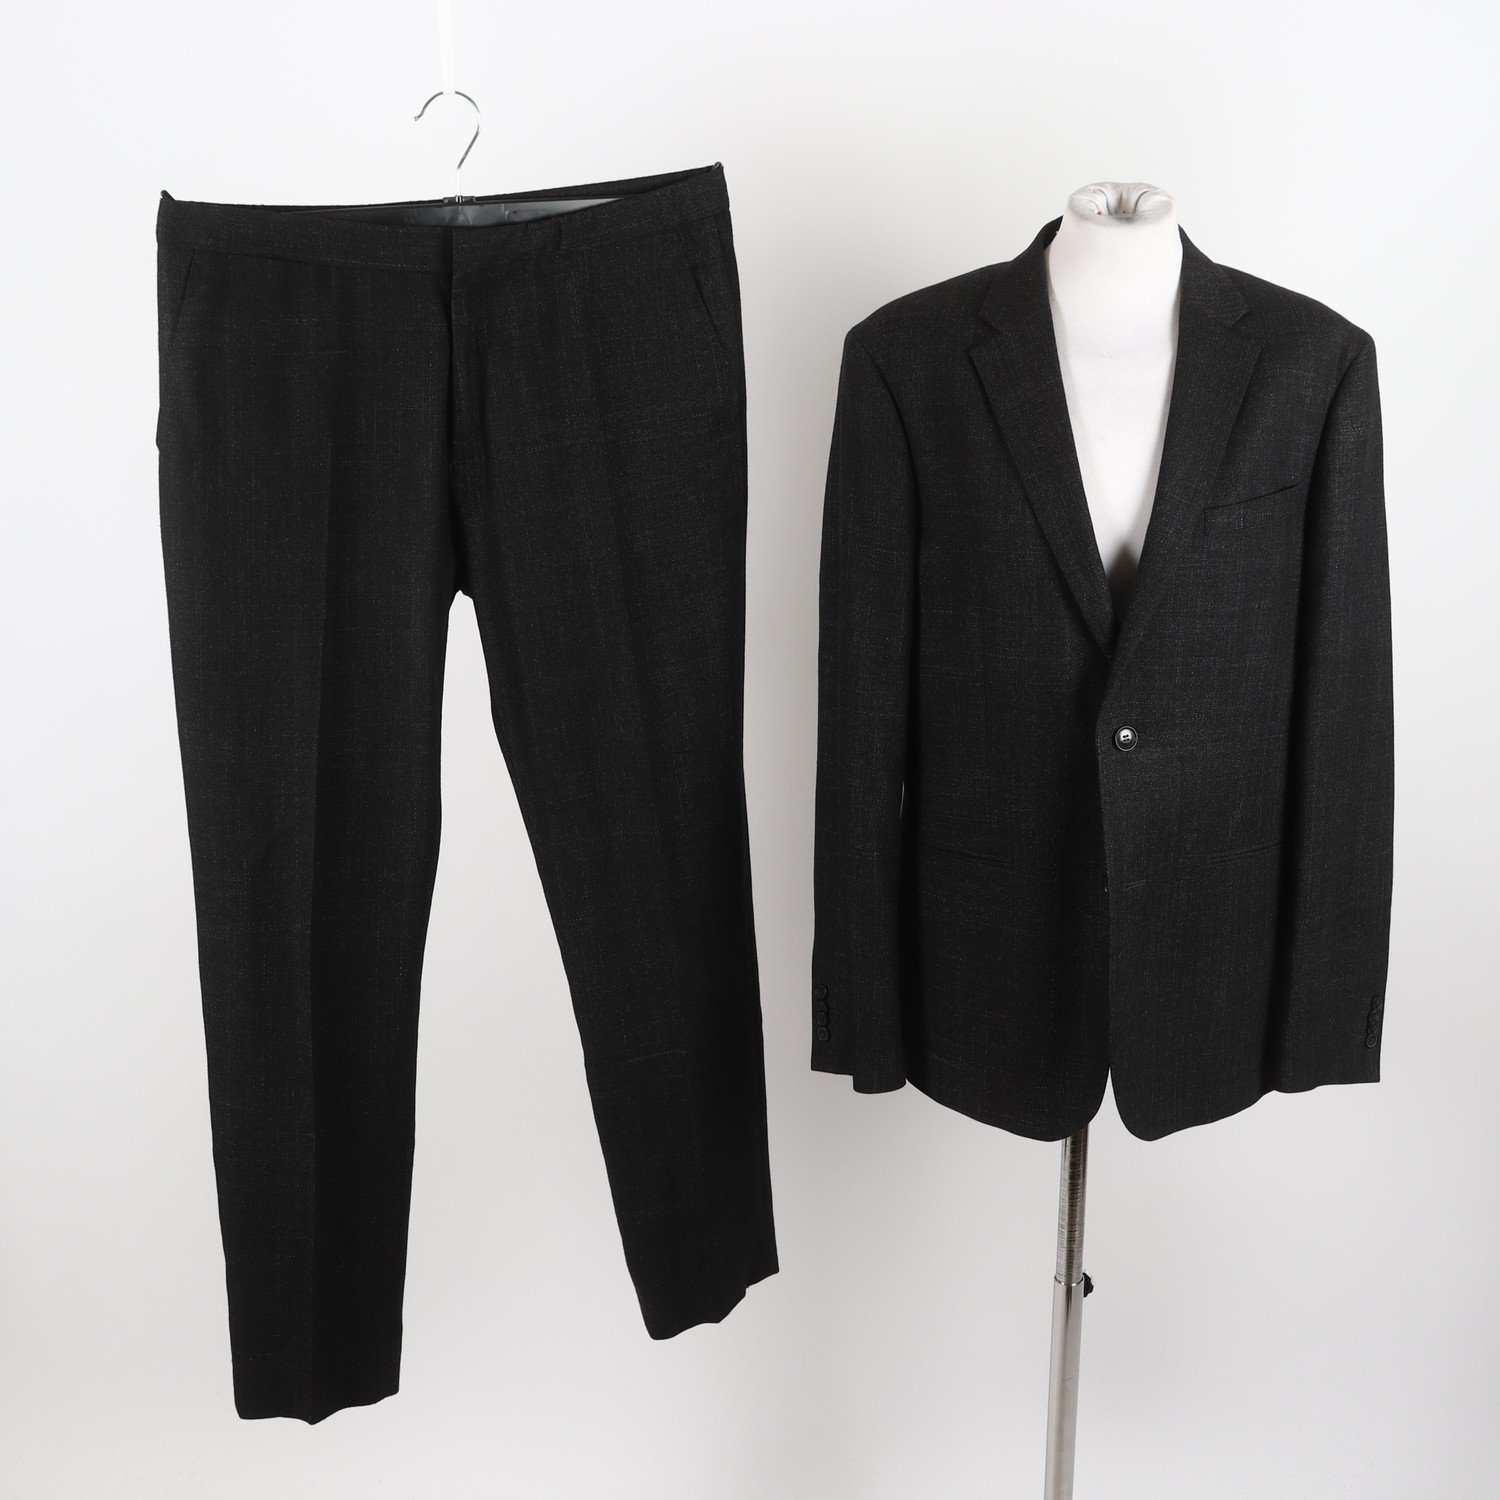 Kostym, Whyred, grå, ullblandning, stl. 48/50